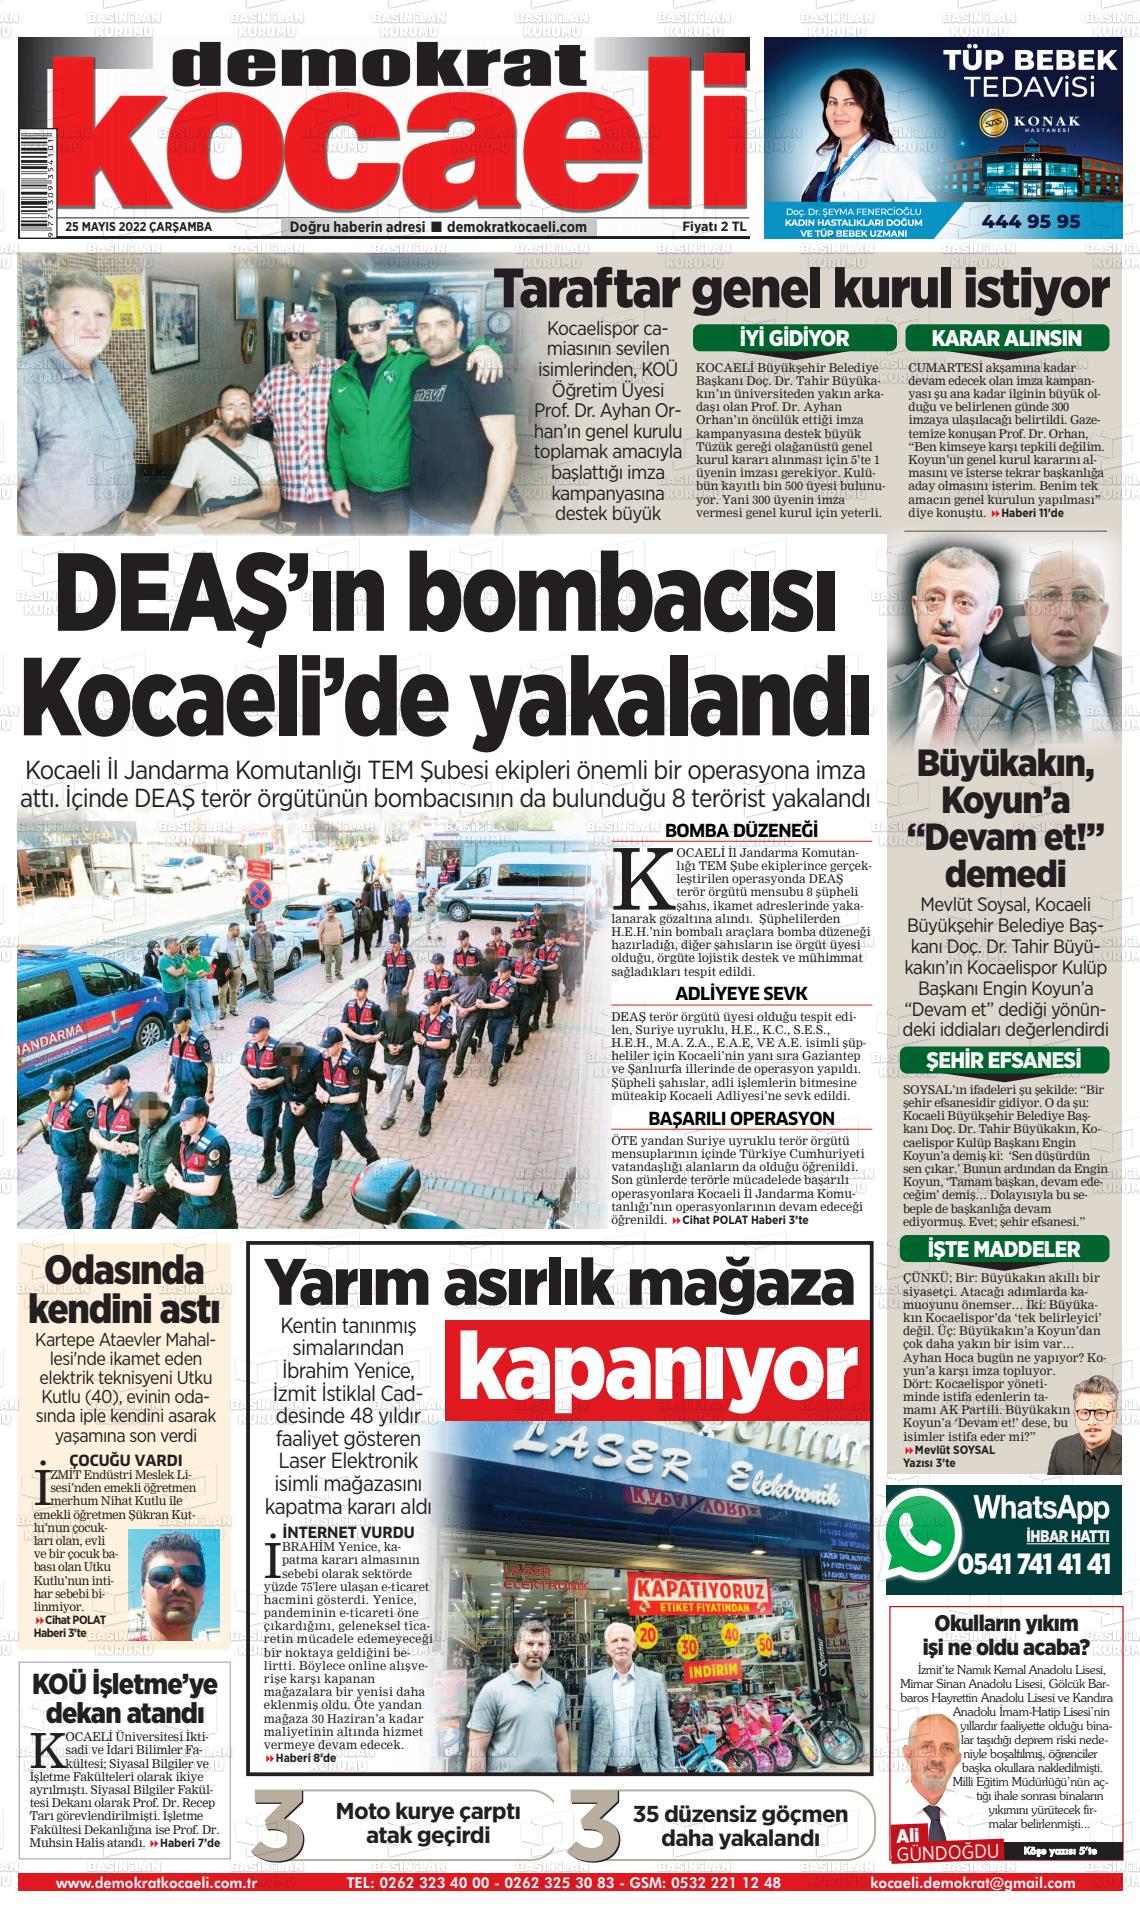 25 Mayıs 2022 Demokrat Kocaeli Gazete Manşeti